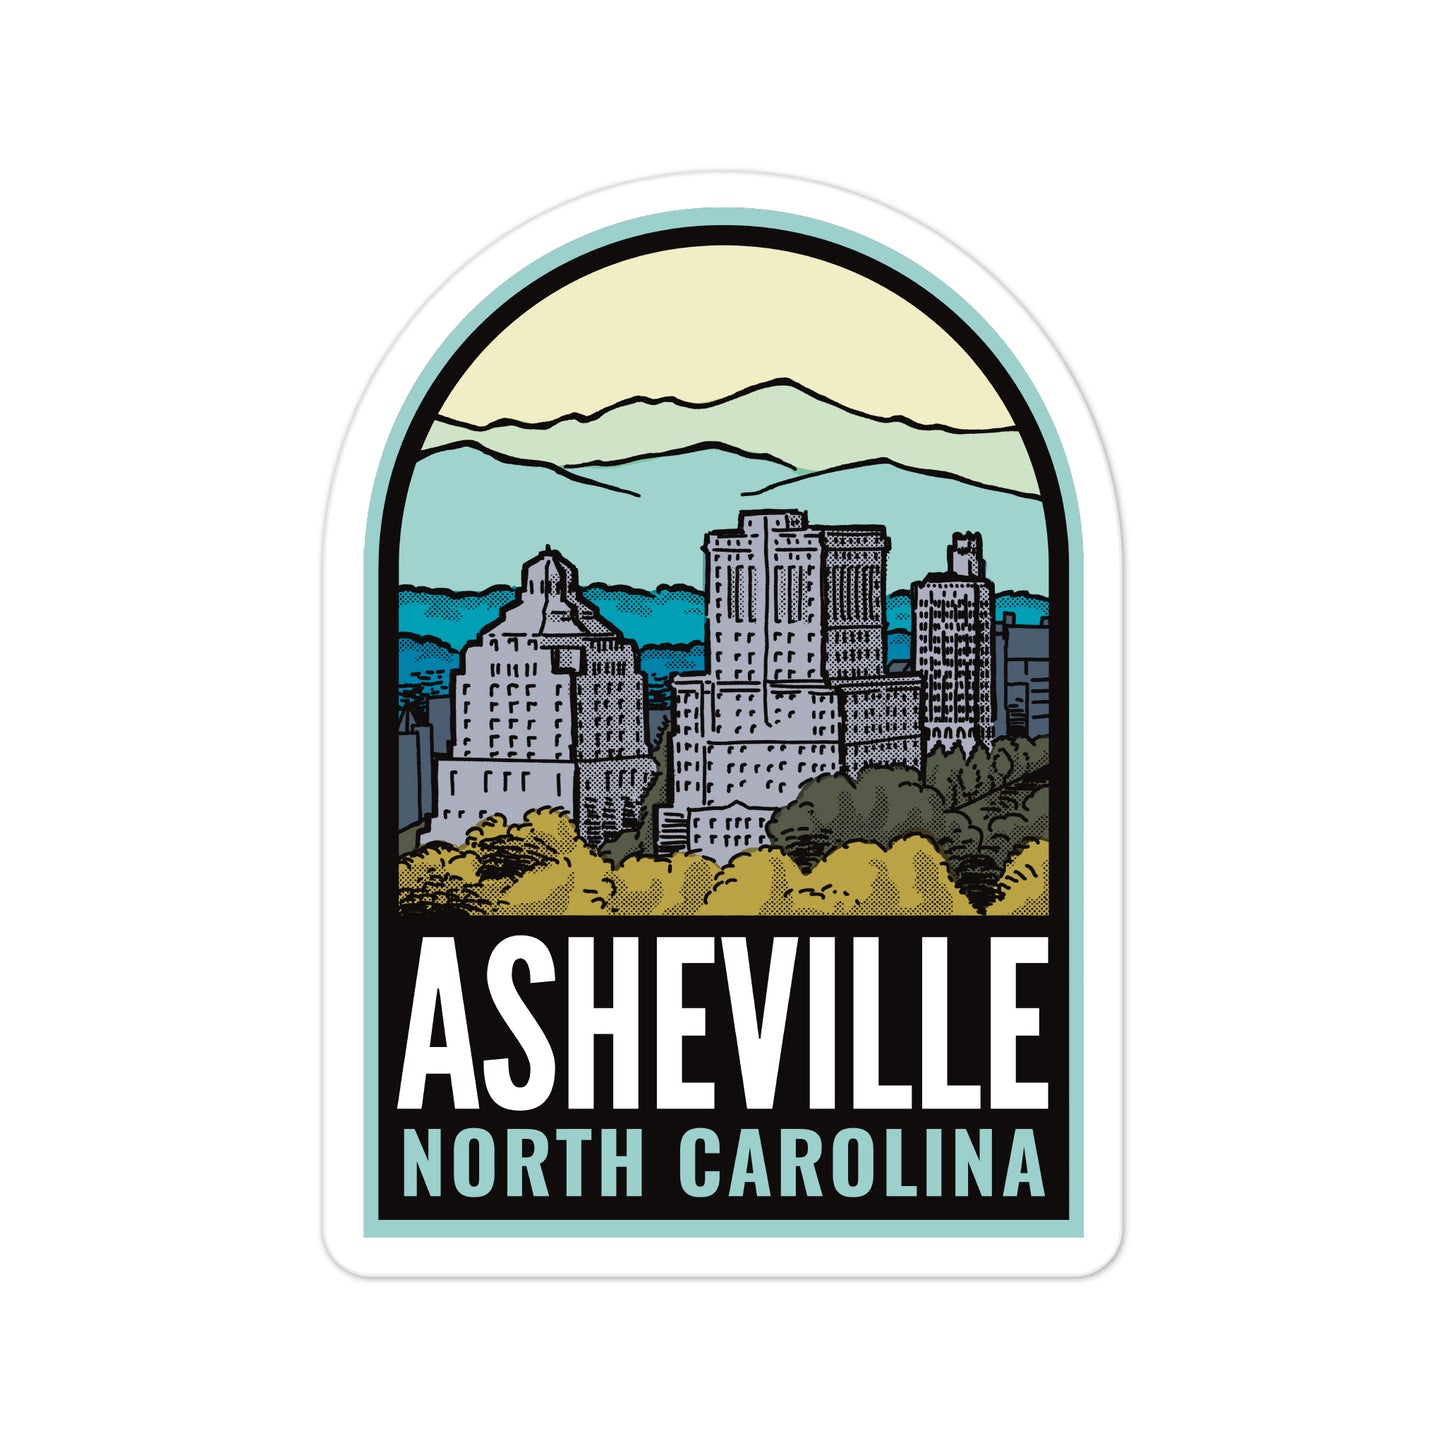 A sticker of Asheville North Carolina